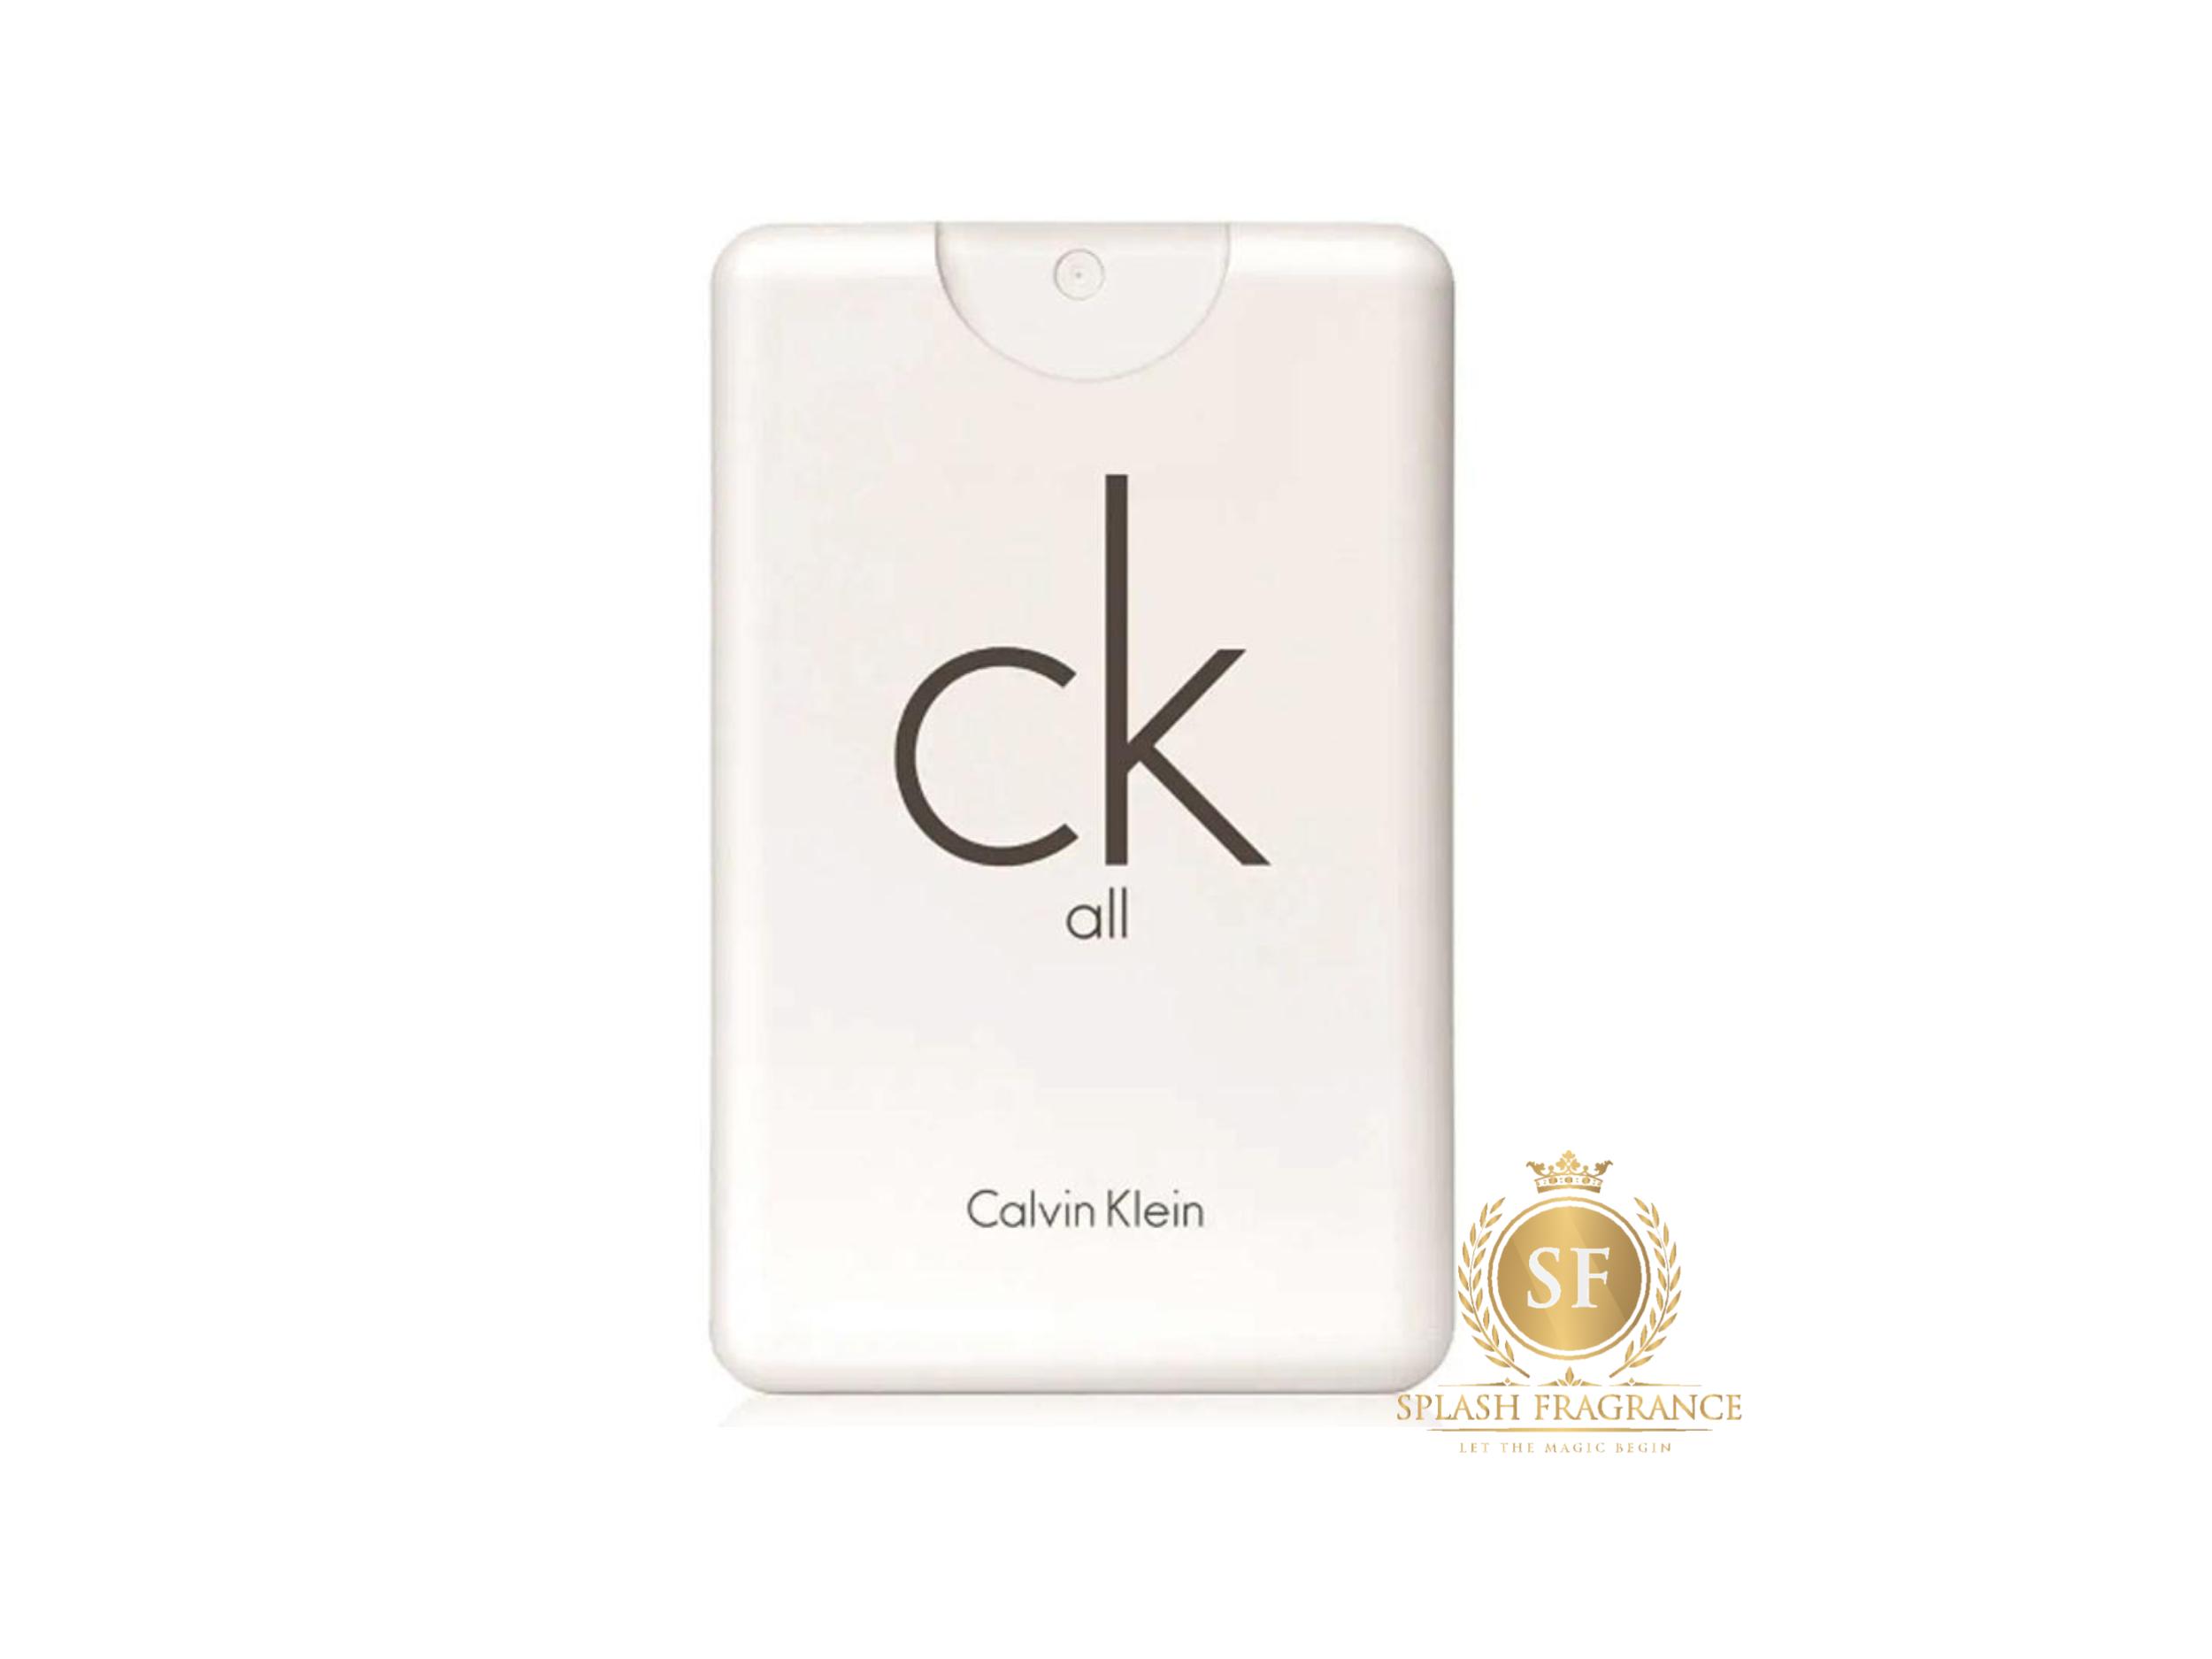 Ck All By Calvin Klein 20ml Perfume Pocket Travel Spray